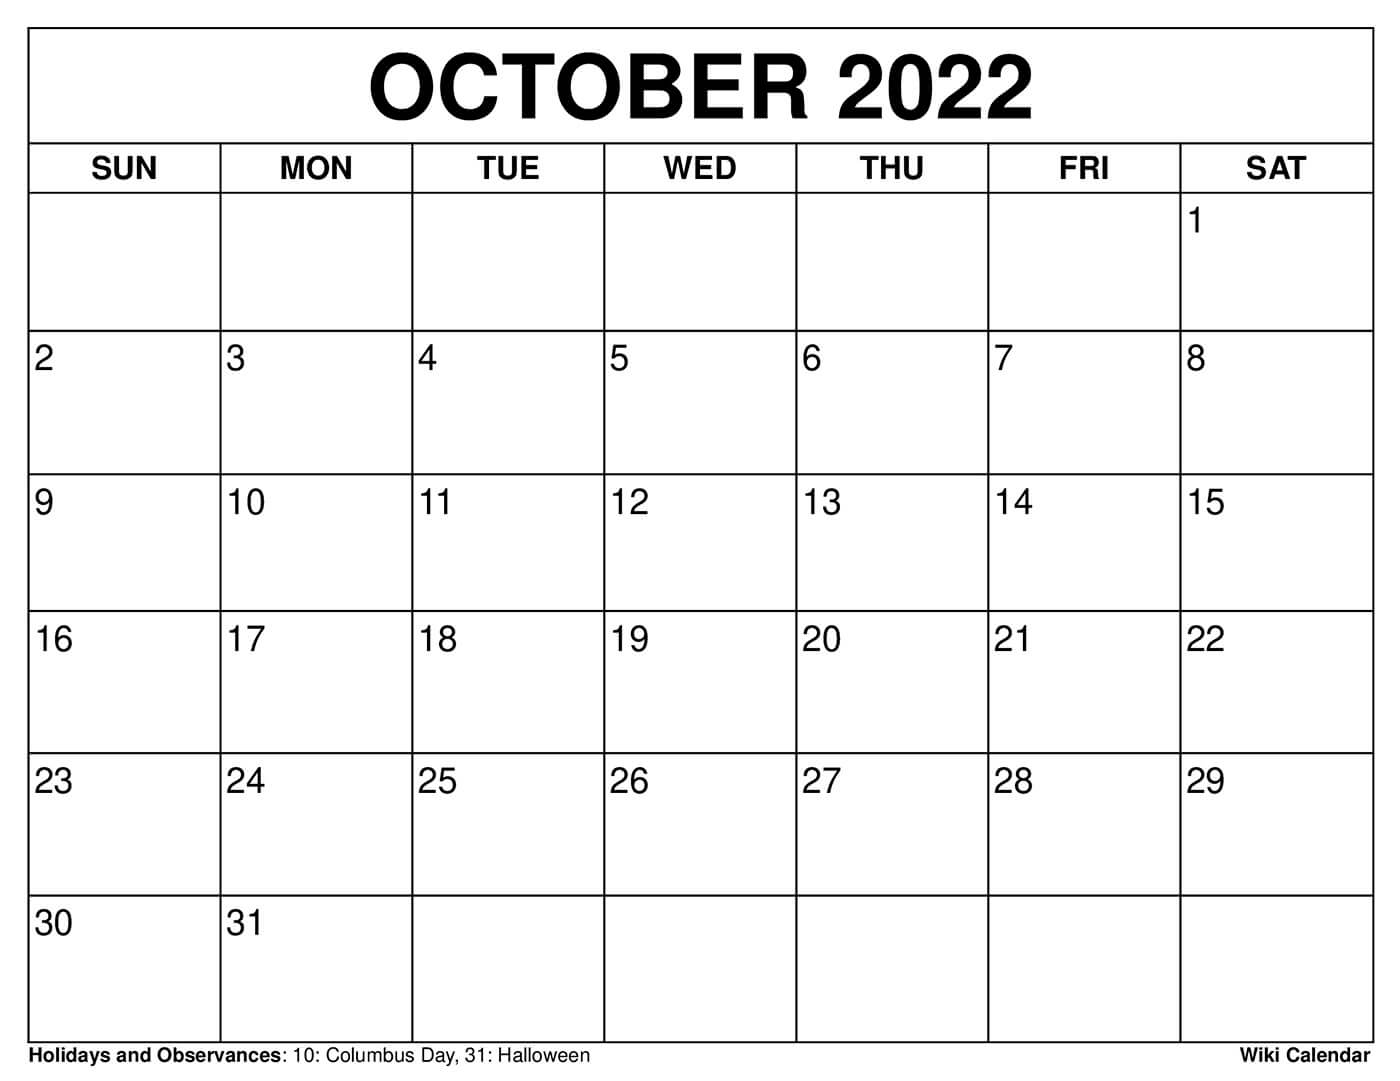 October 2022 Calendar Page Free Printable October 2022 Calendars - Wiki Calendar